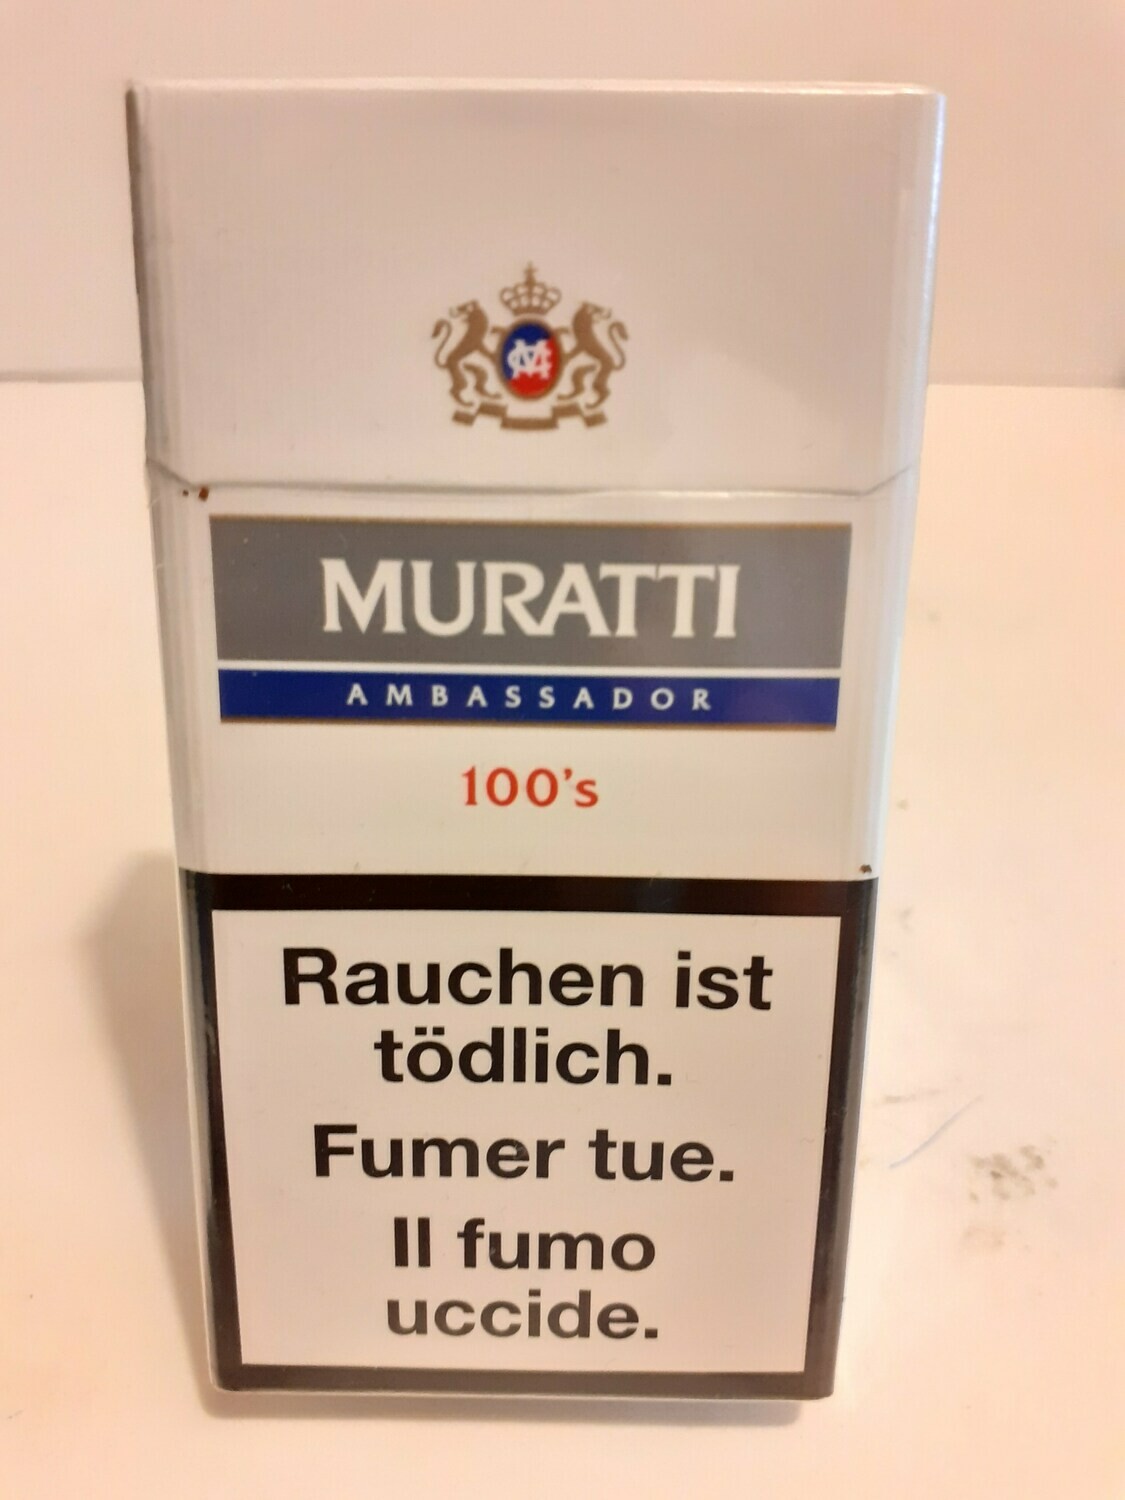 Muratti Ambassador 100s